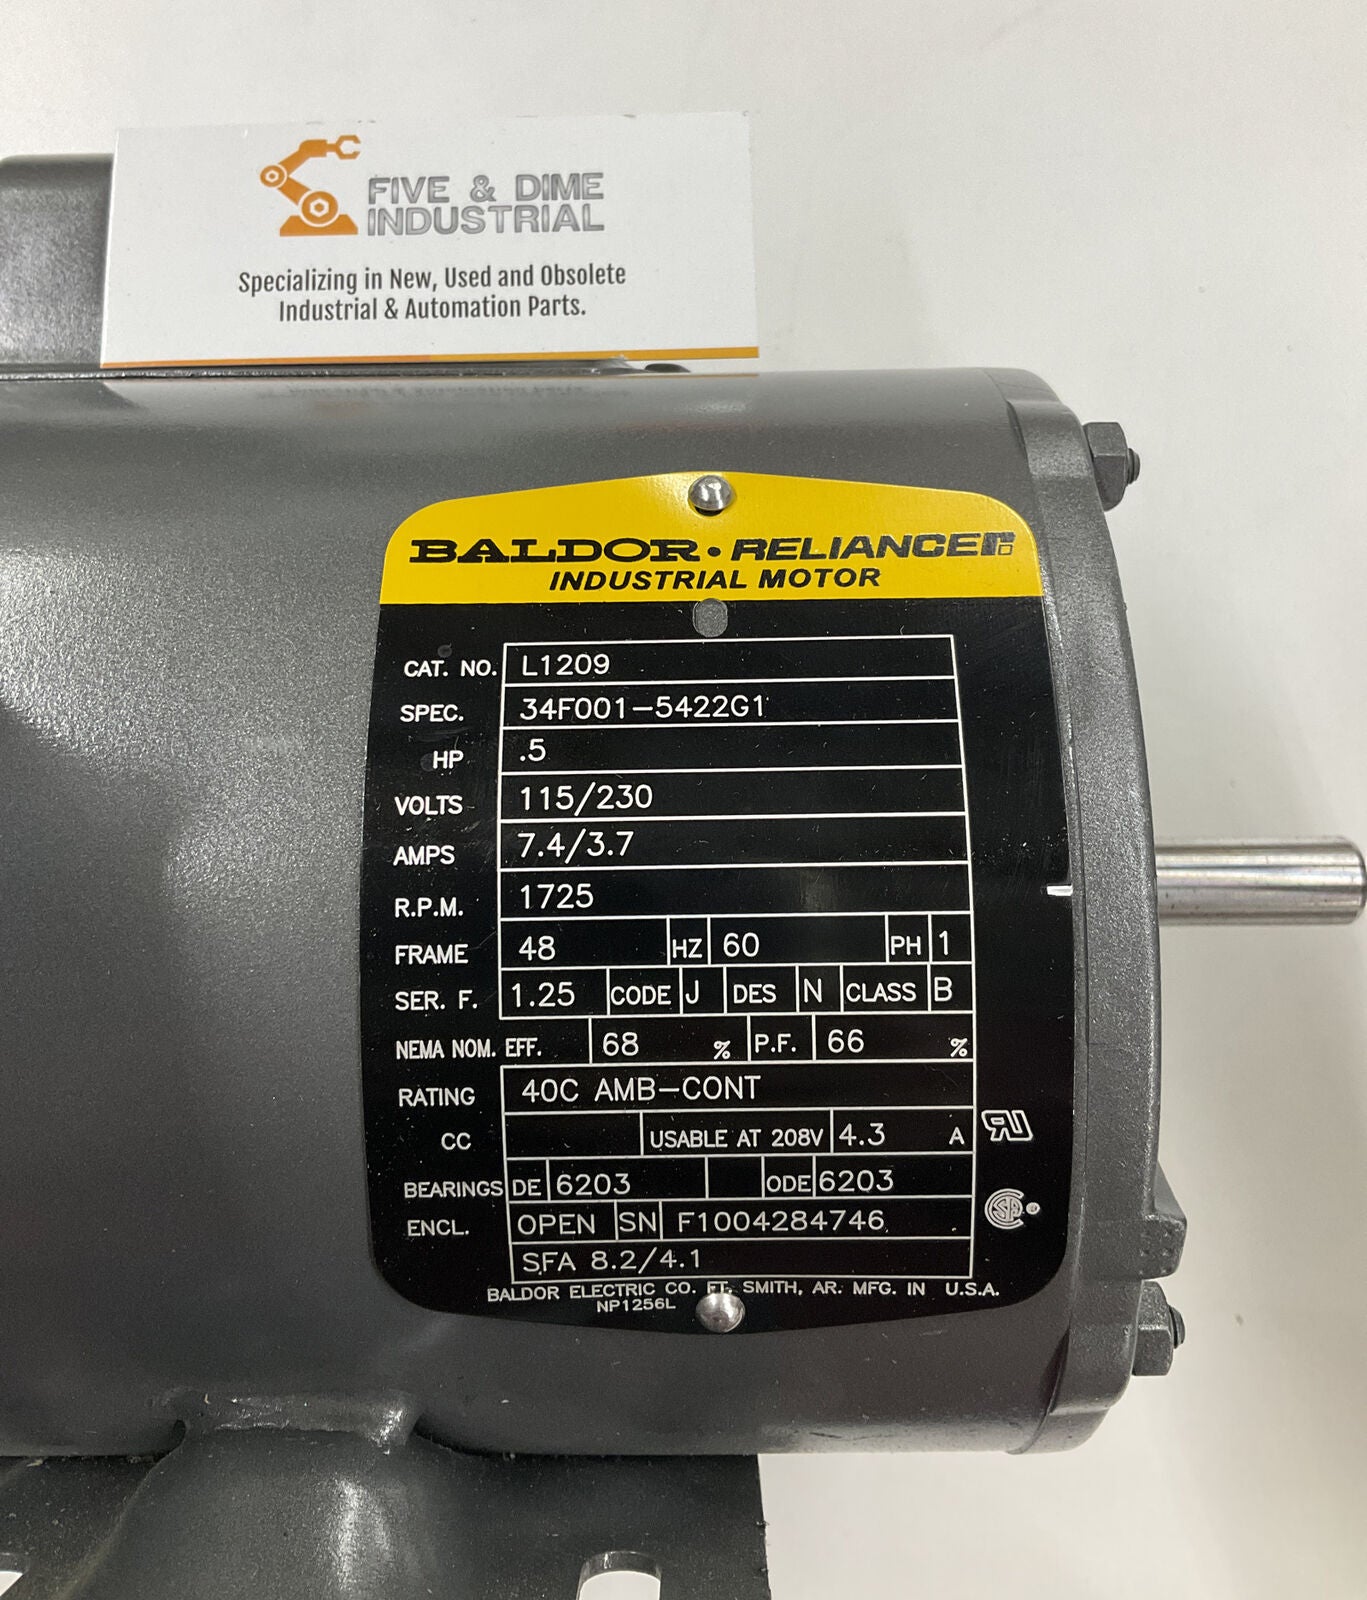 Baldor Reliance L1209 .50 HP 115/230VAC Industrial Motor 1725 RPM Frame 48 OV118